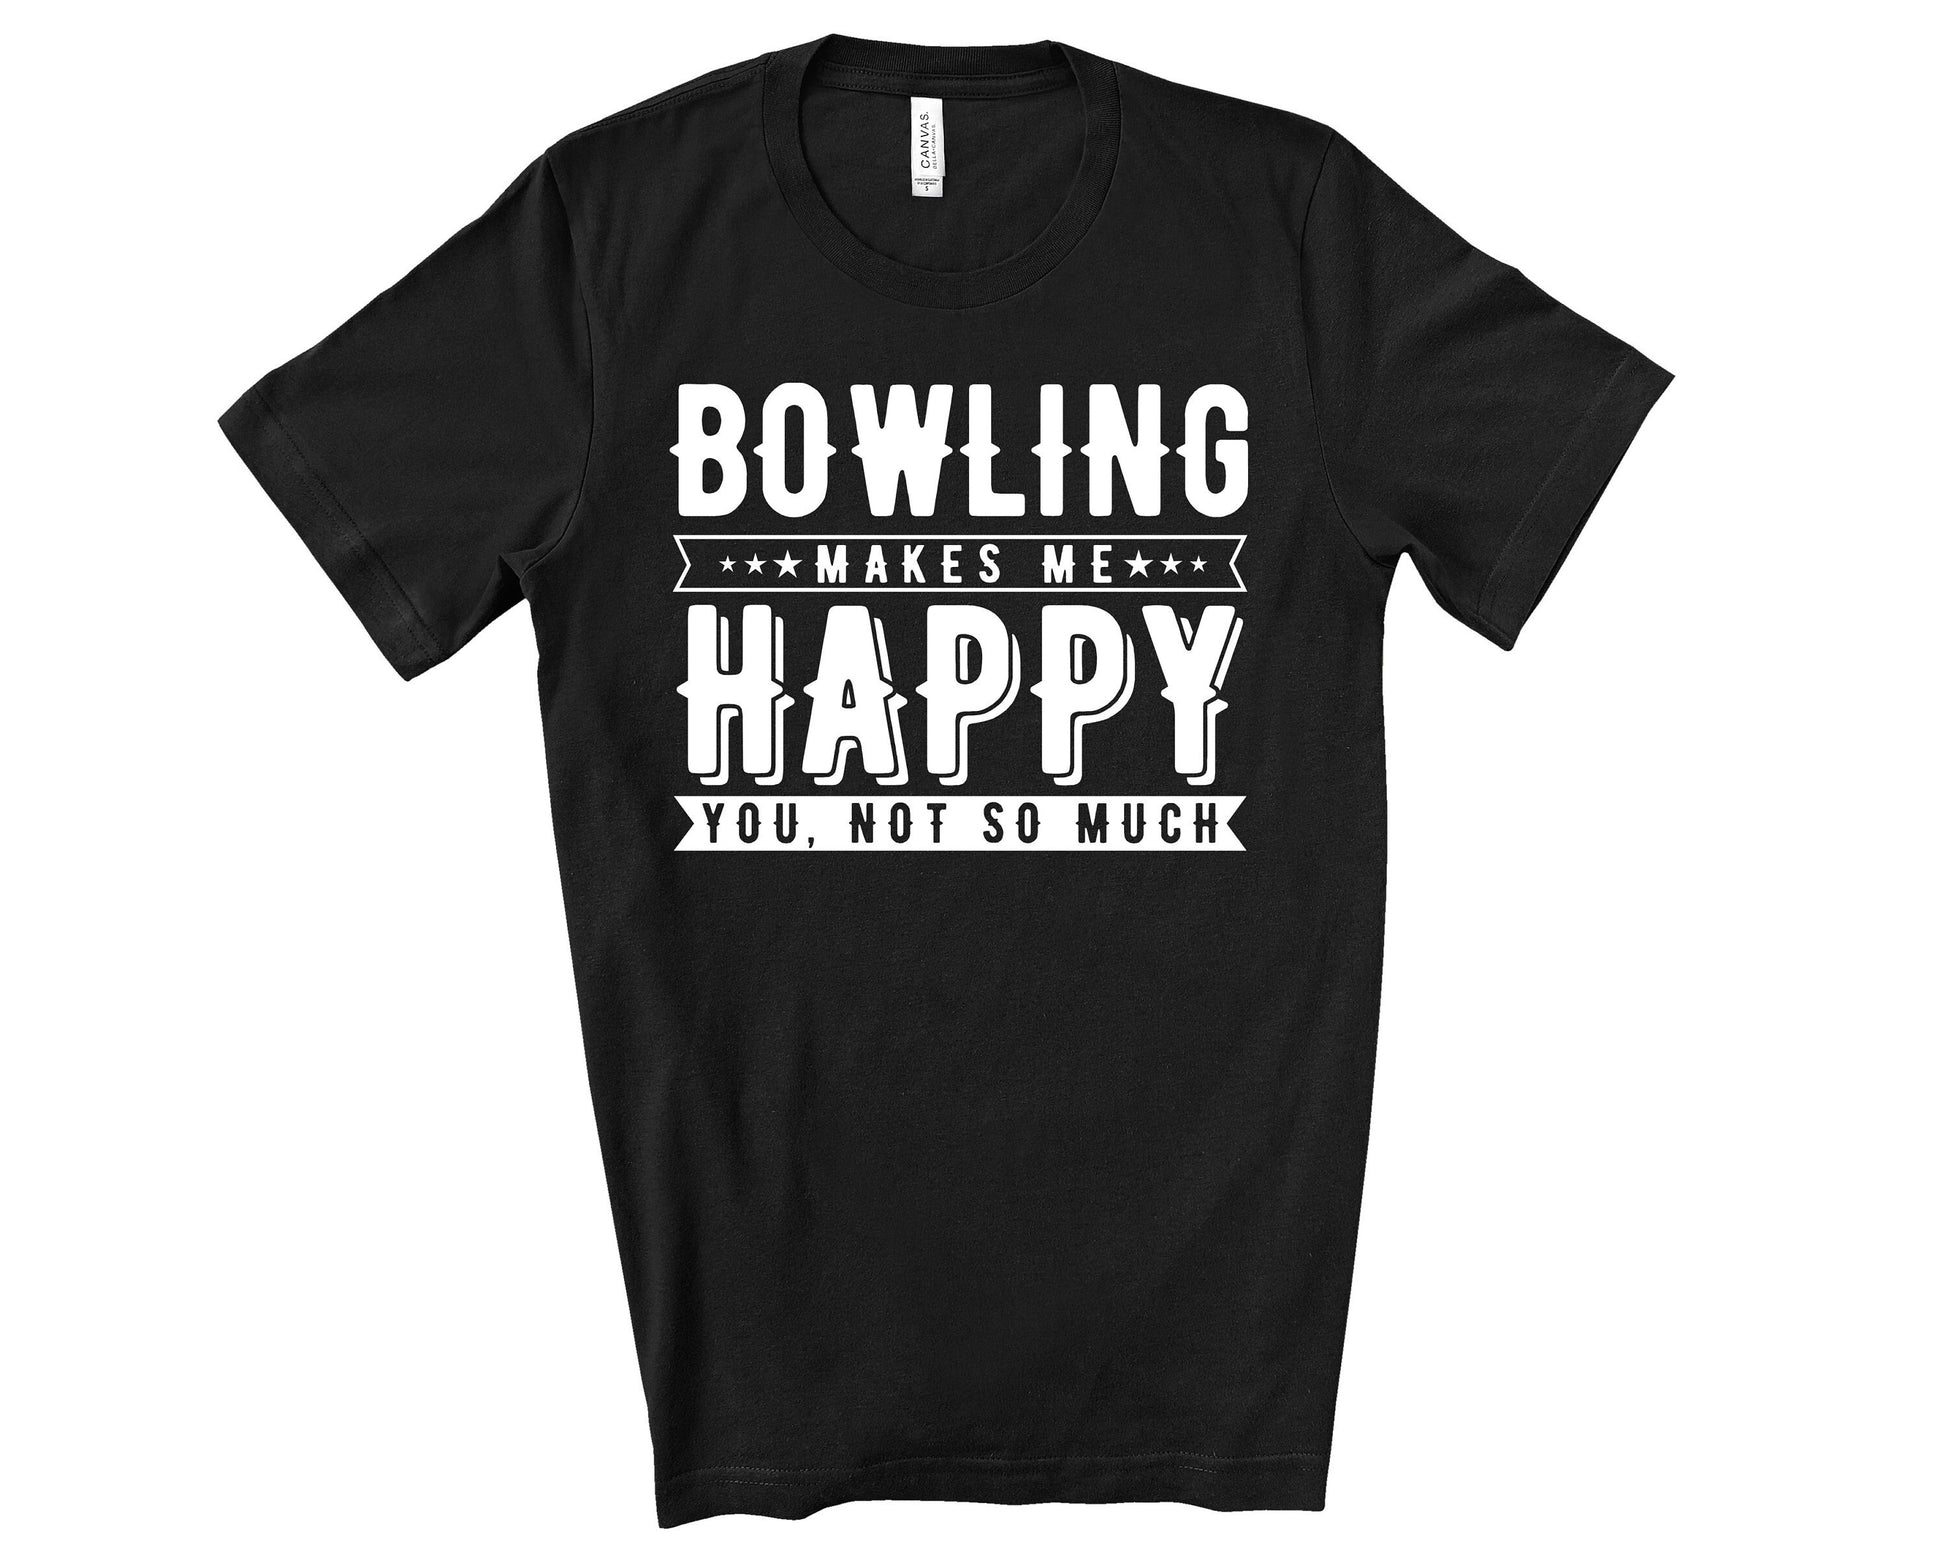 Bowling Makes Me Happy Unisex Adult t-shirt - Bowling T-shirt - Bowling League Shirt - Custom Bowling Team Shirt - Bowling Gift